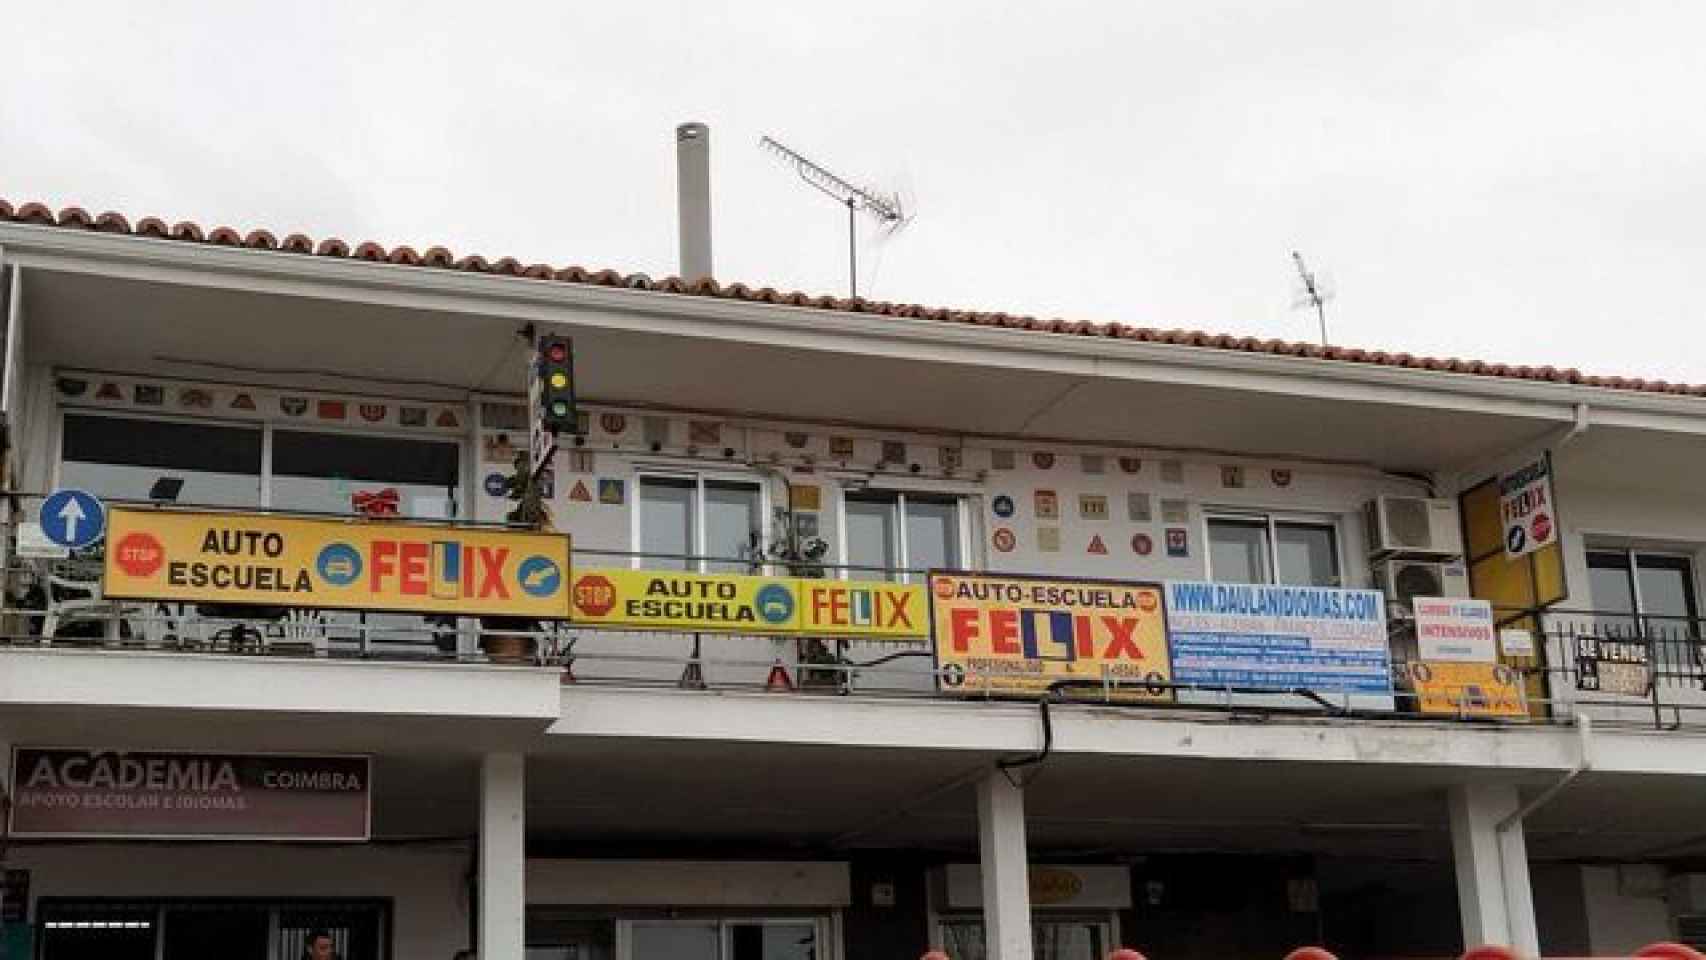 La autoescuela Félix, en Parque Coimbra, Móstoles.